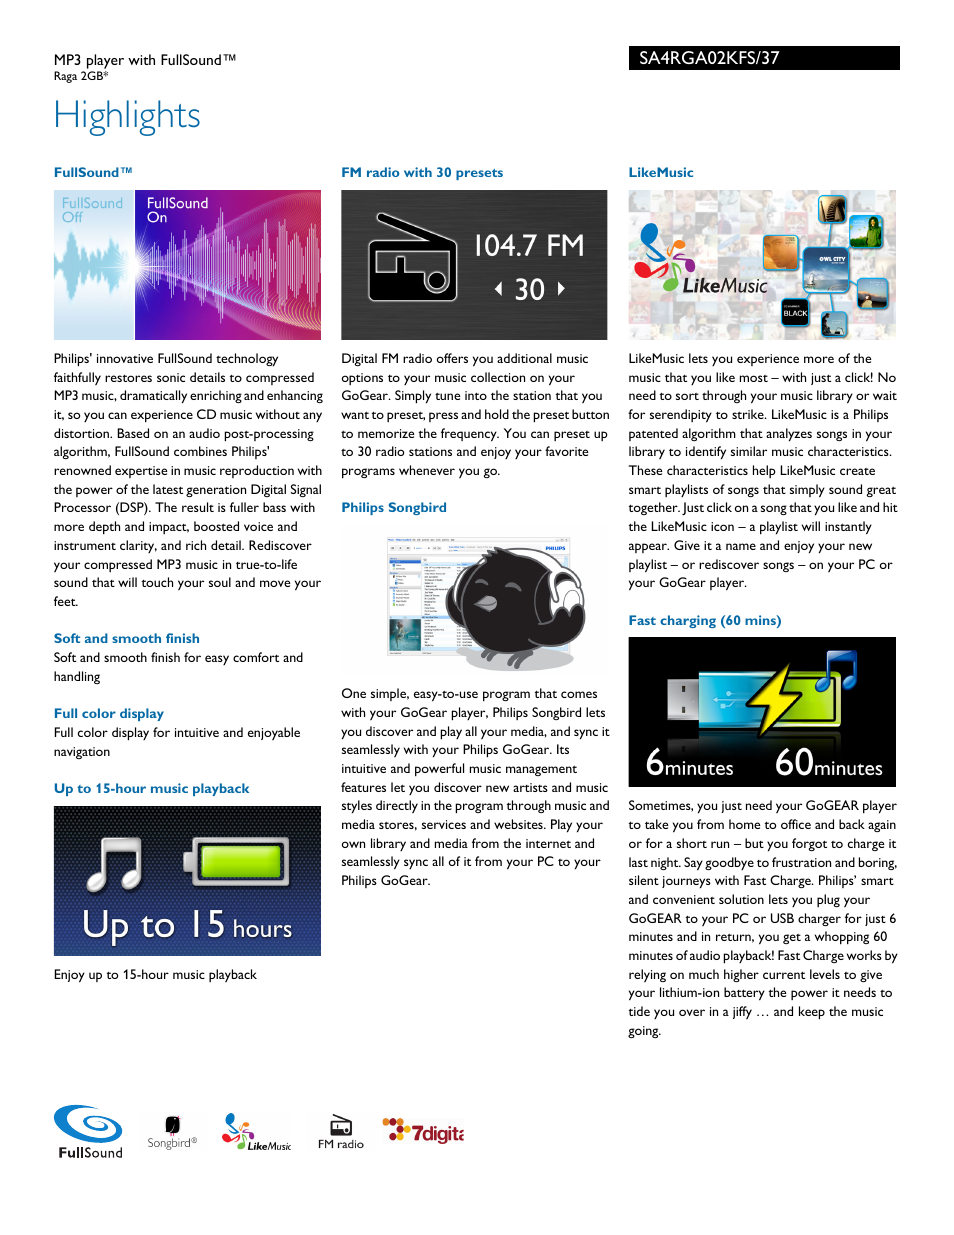 Highlights | Philips GoGEAR MP3 player SA4RGA02KFS Raga 2GB* with  FullSound™ User Manual | Page 2 / 3 | Original mode